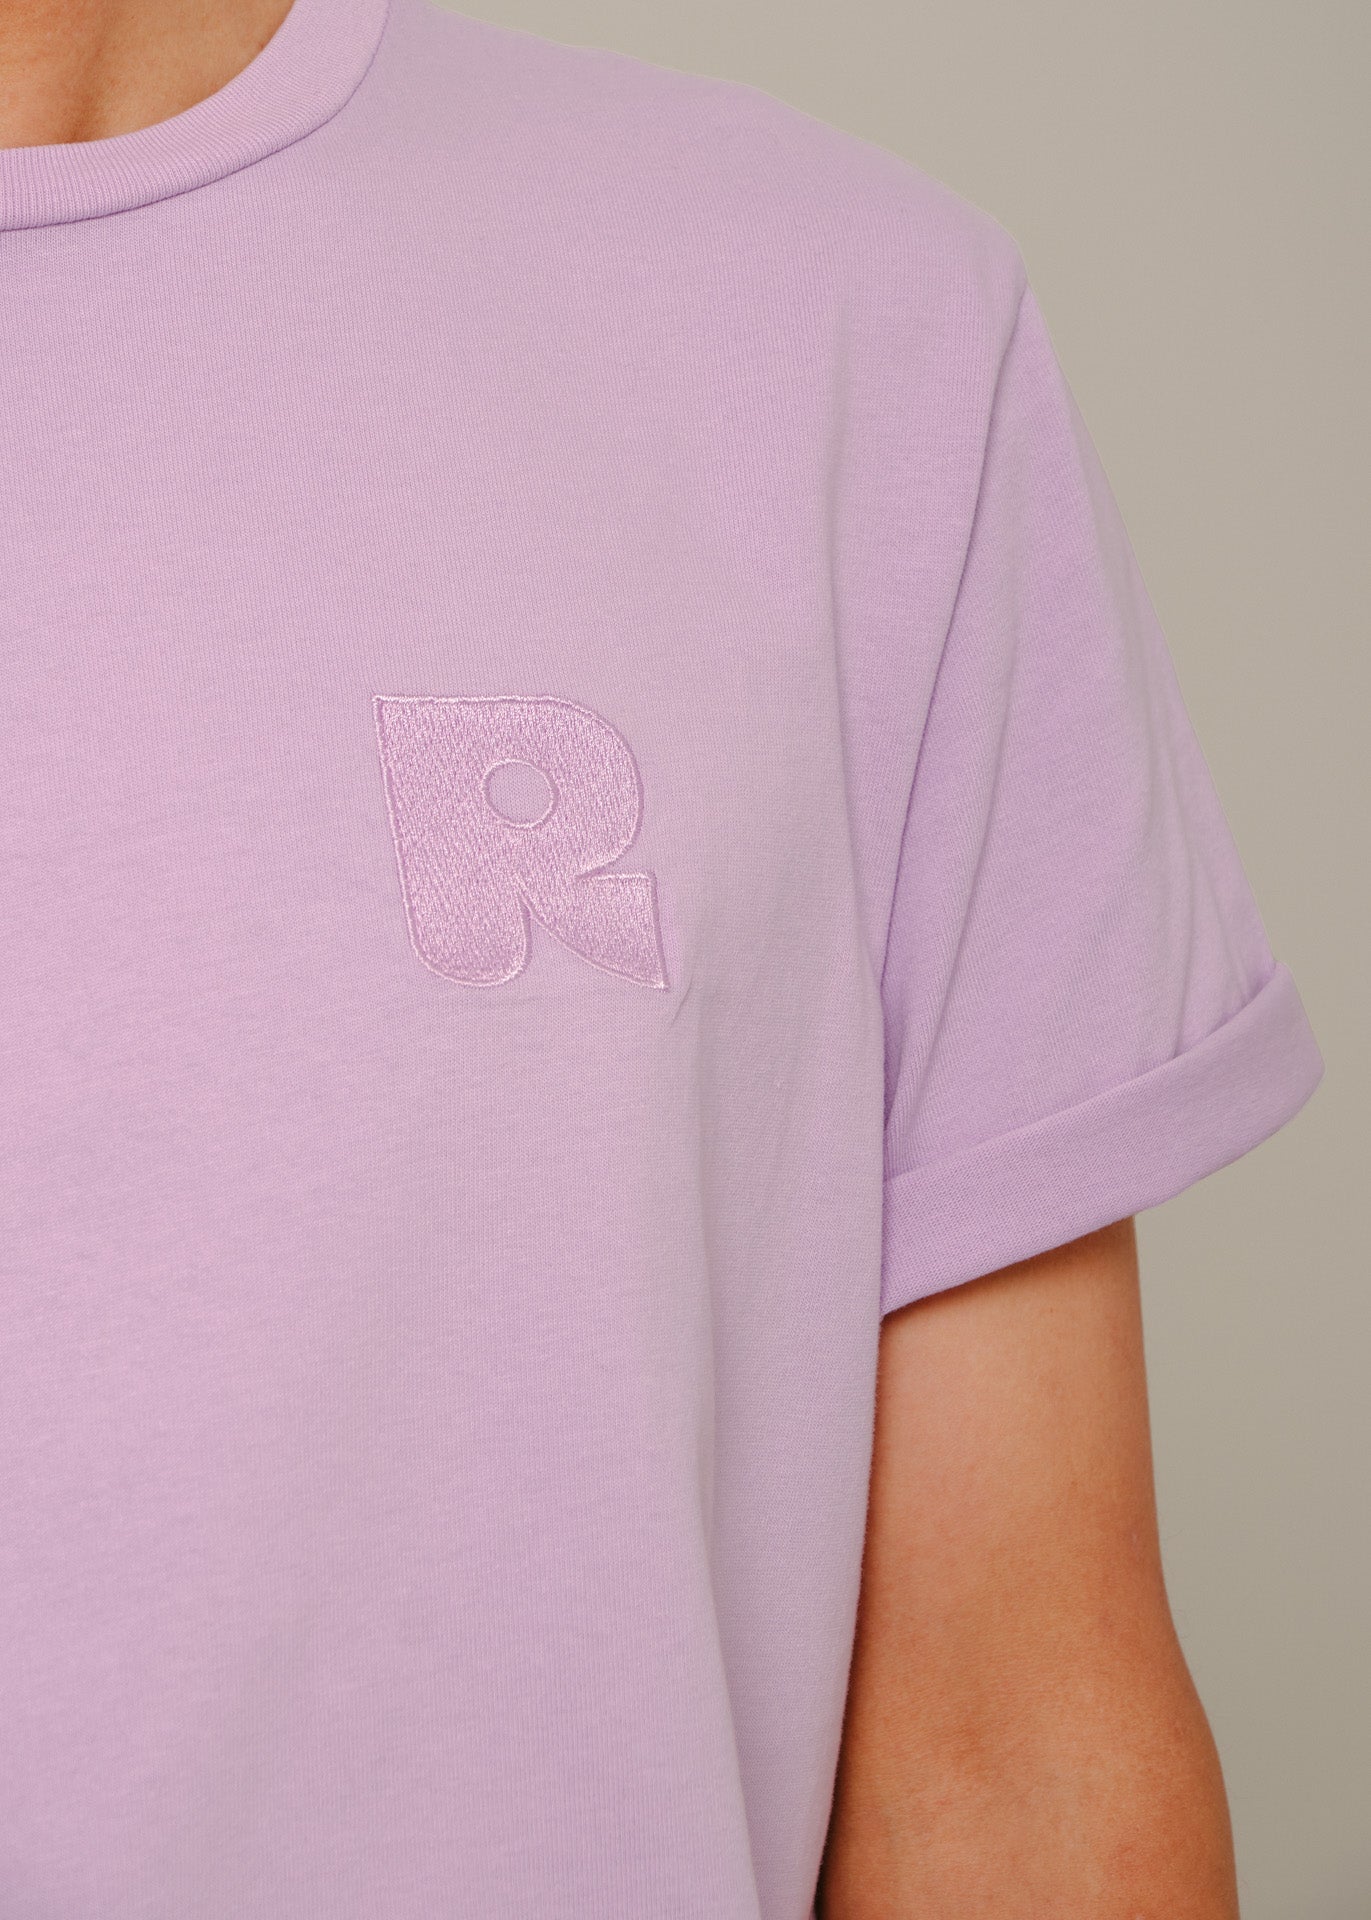 The Purple t-shirt